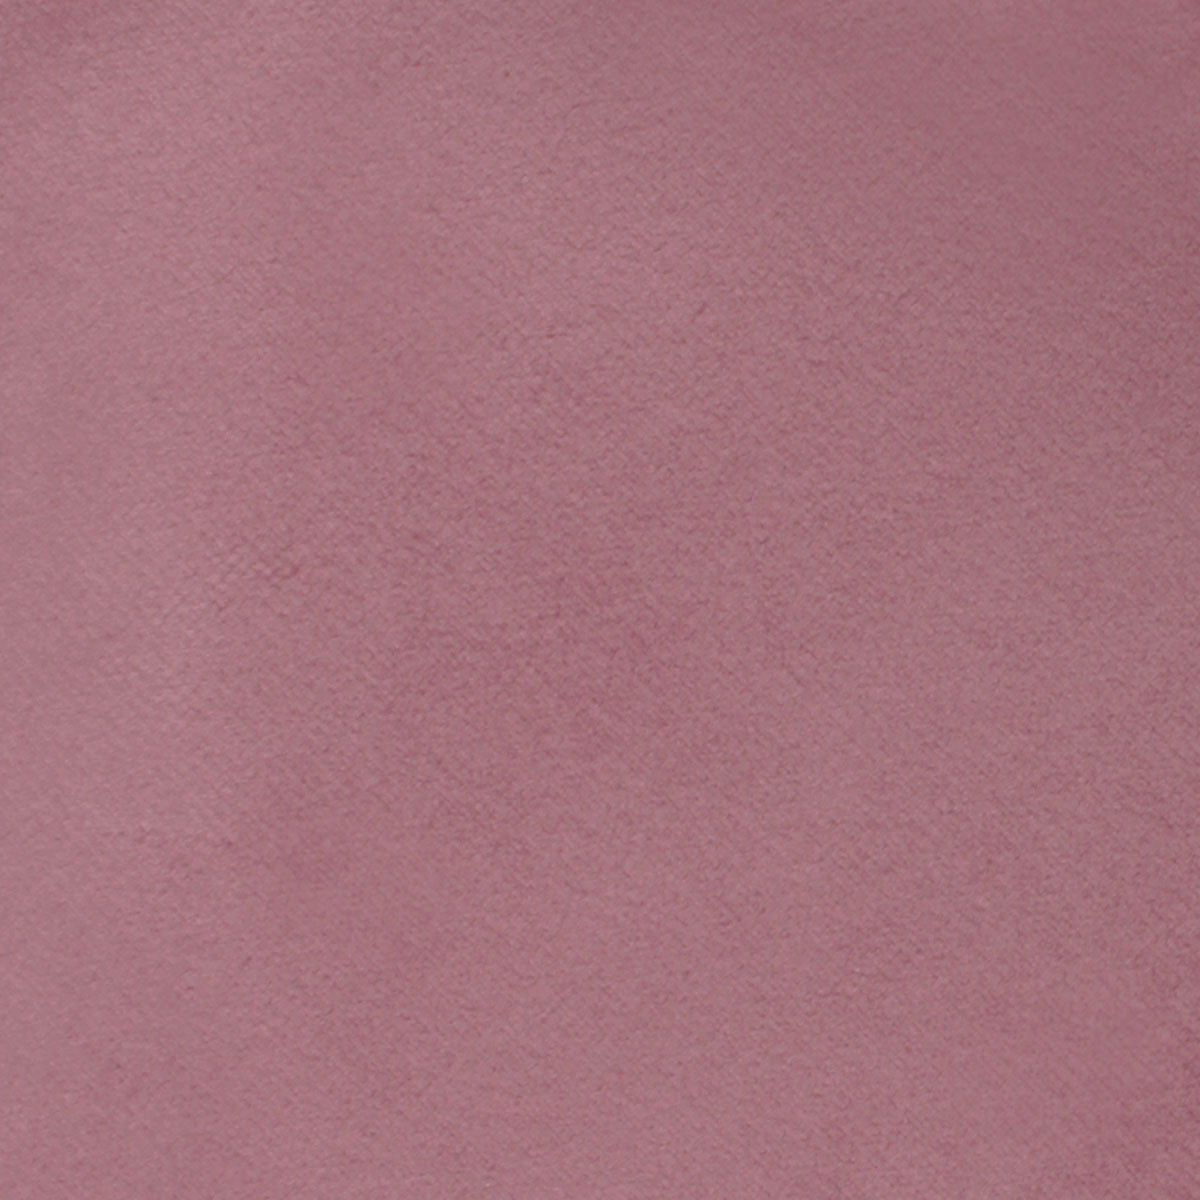 Nude Pink Velvet Fabric Skinny Tie